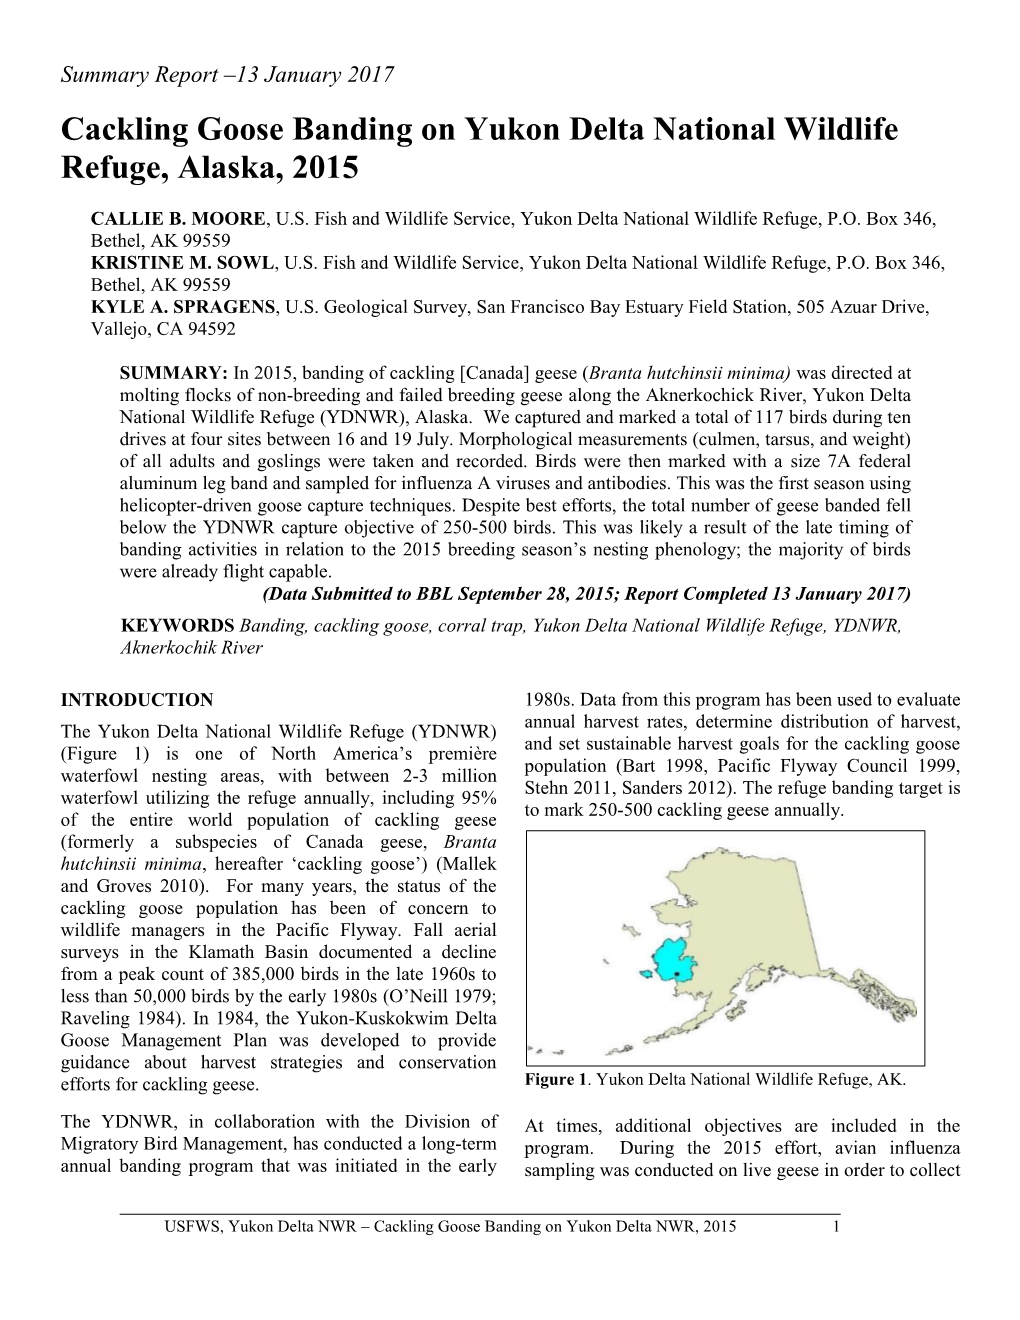 Cackling Goose Banding on Yukon Delta National Wildlife Refuge, Alaska, 2015